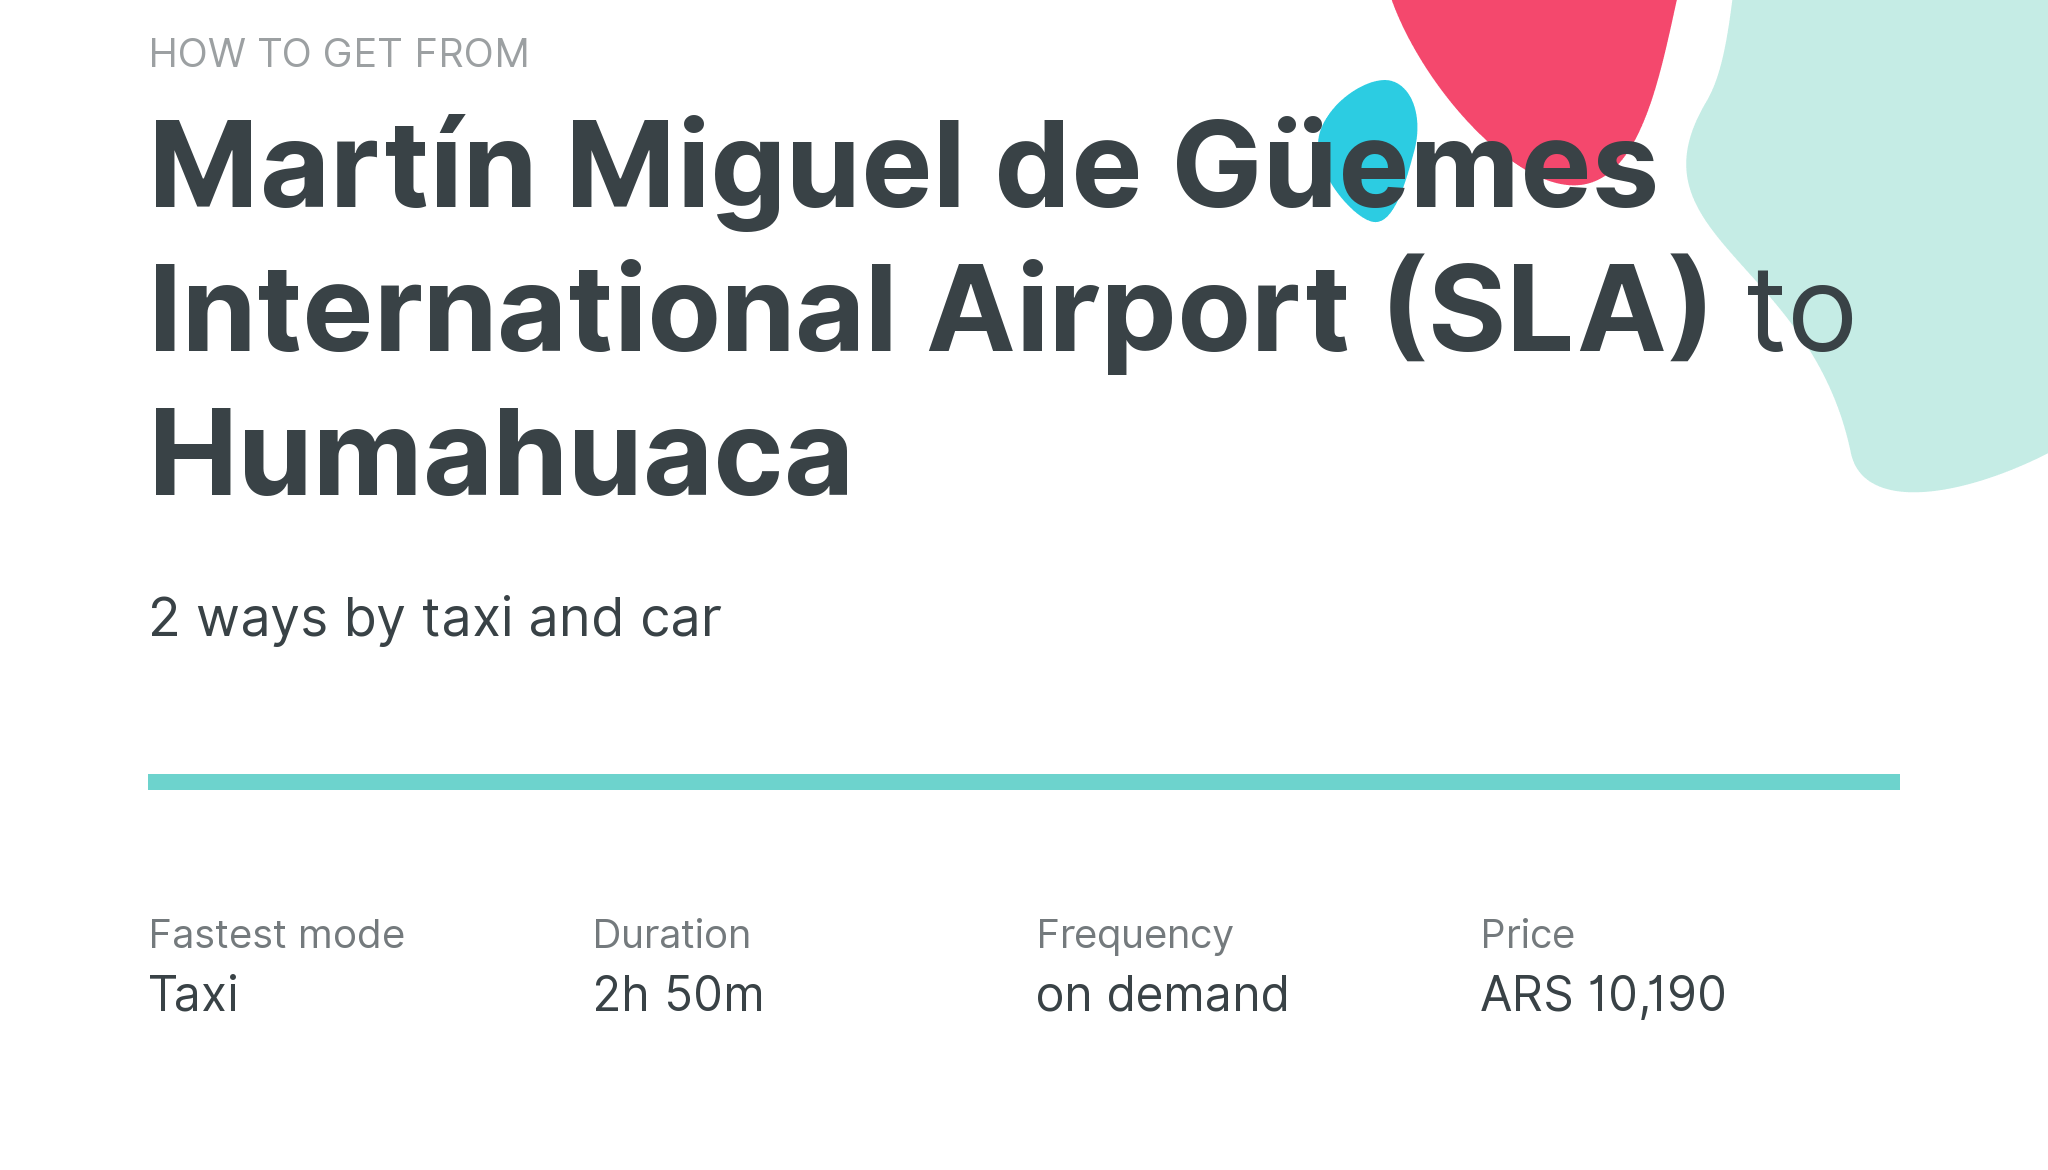 How do I get from Martín Miguel de Güemes International Airport (SLA) to Humahuaca